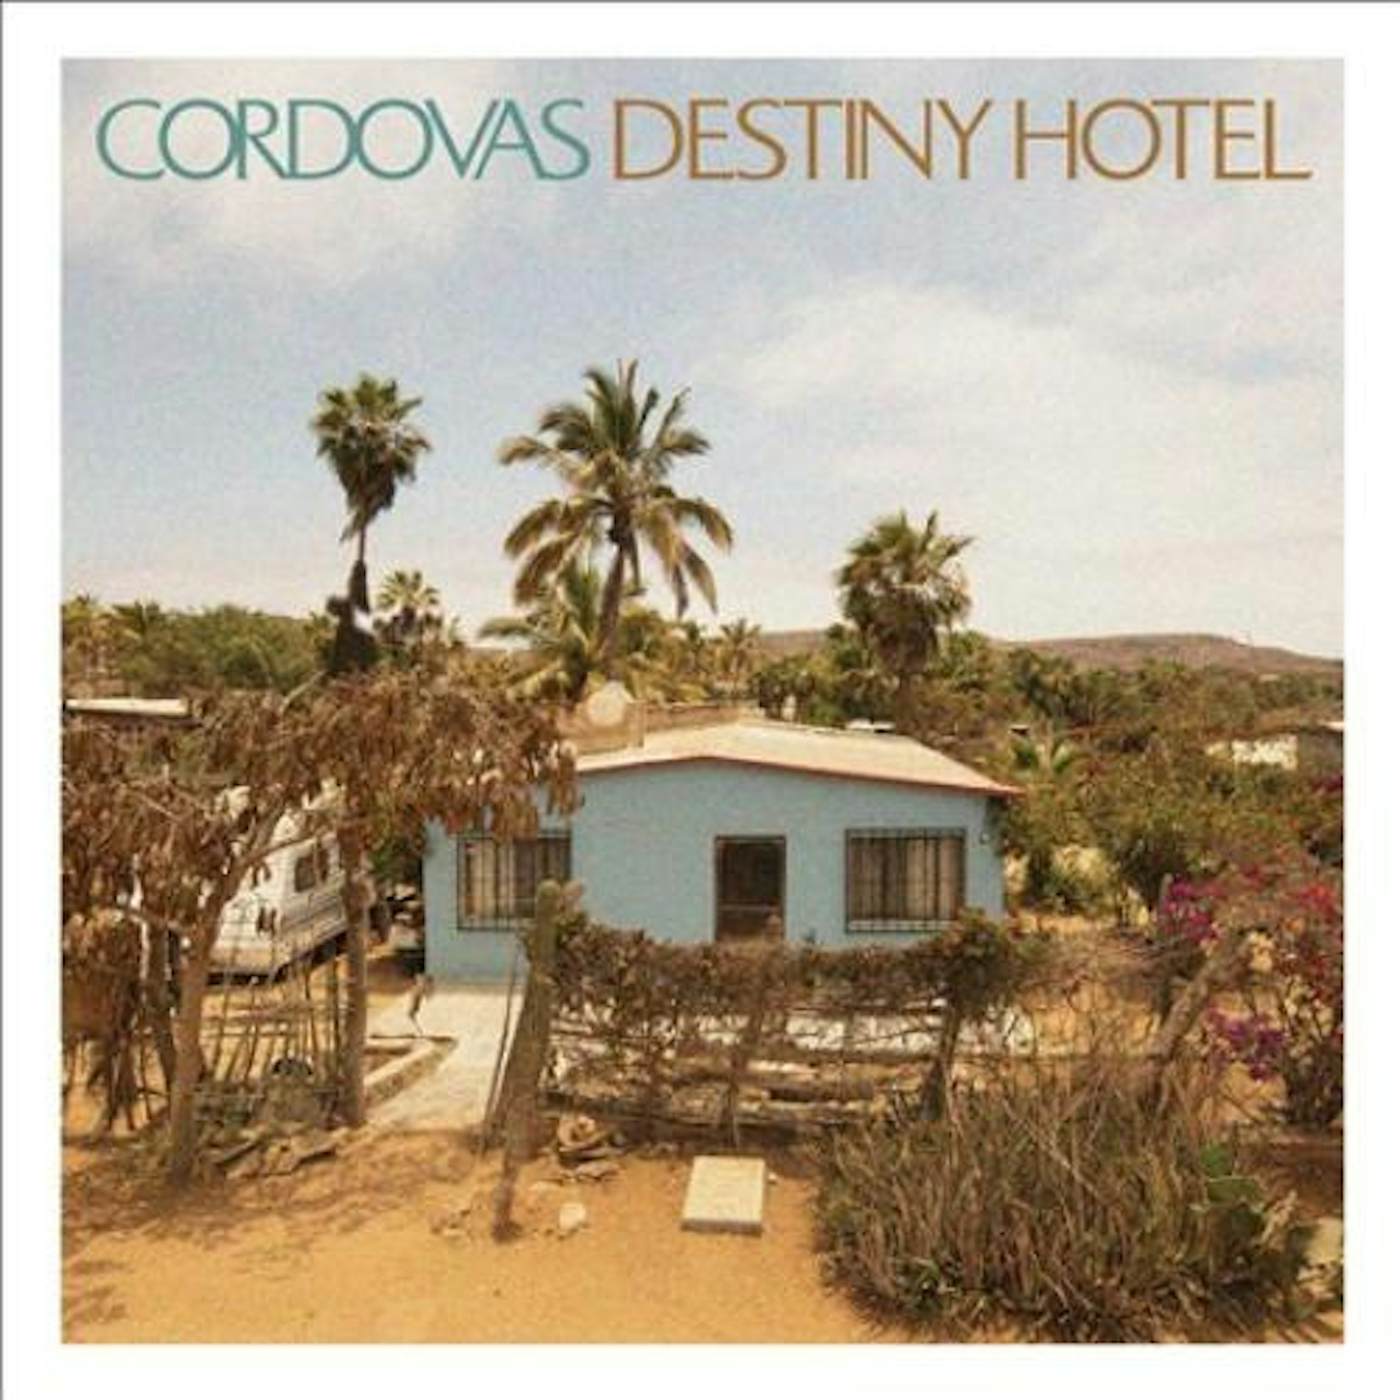 Cordovas Destiny Hotel Vinyl Record